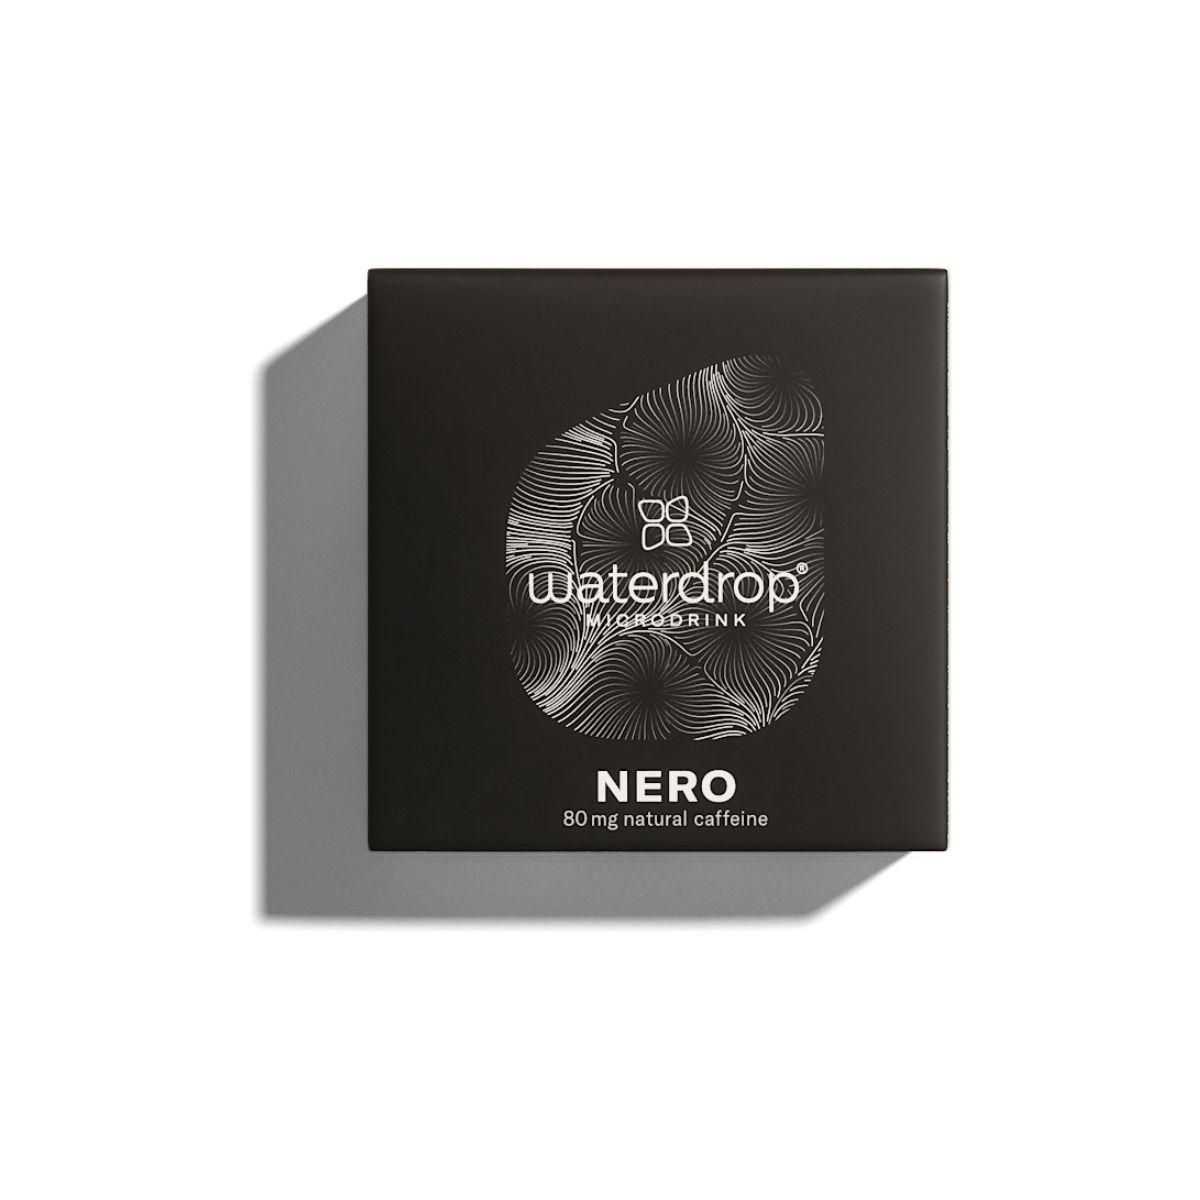 WATERDROP Saveur Microdrink Nero Pack de 12